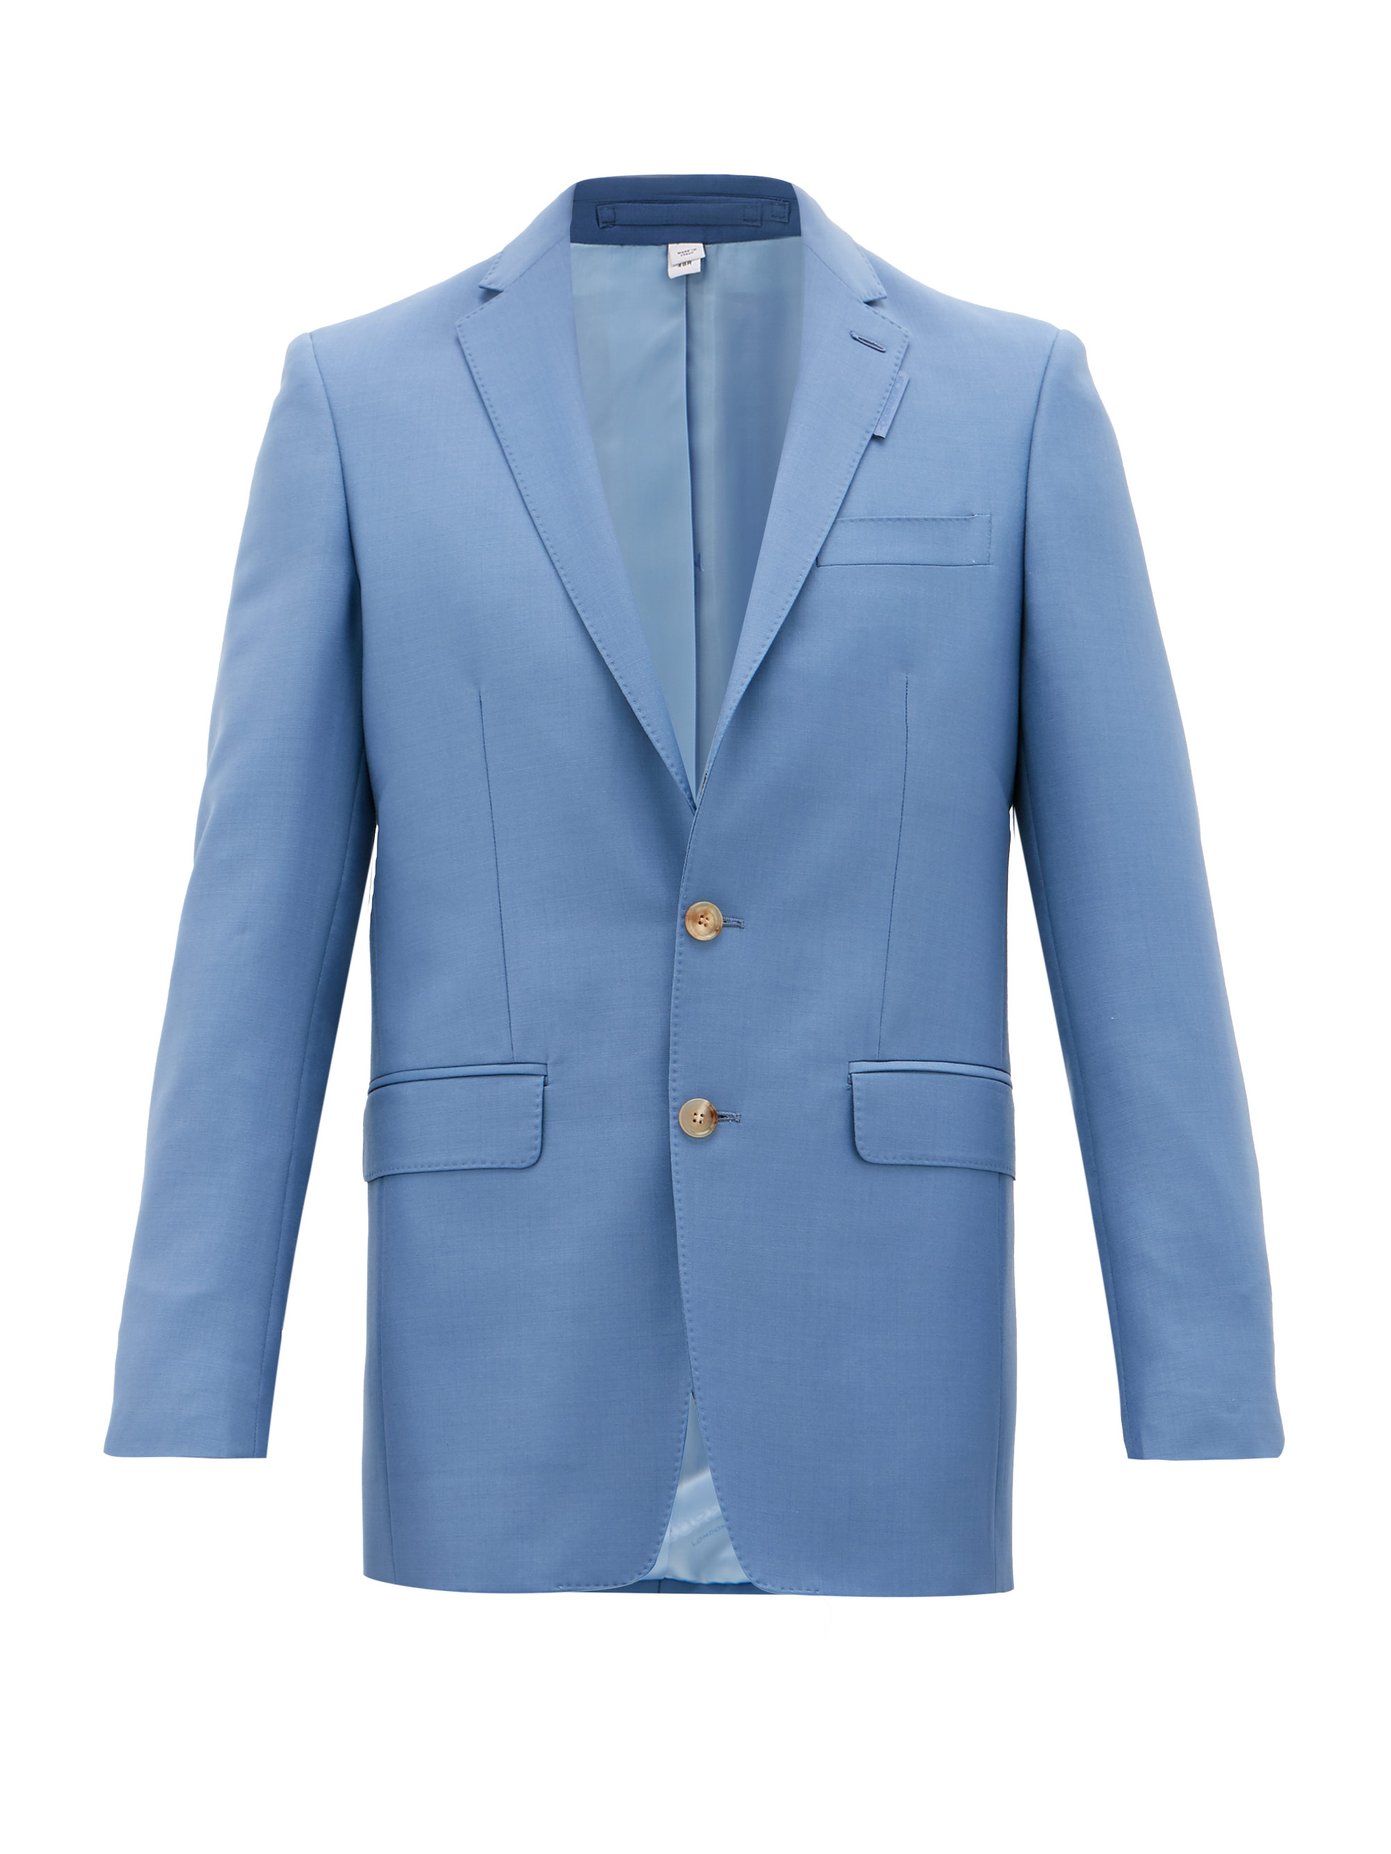 burberry suit coat